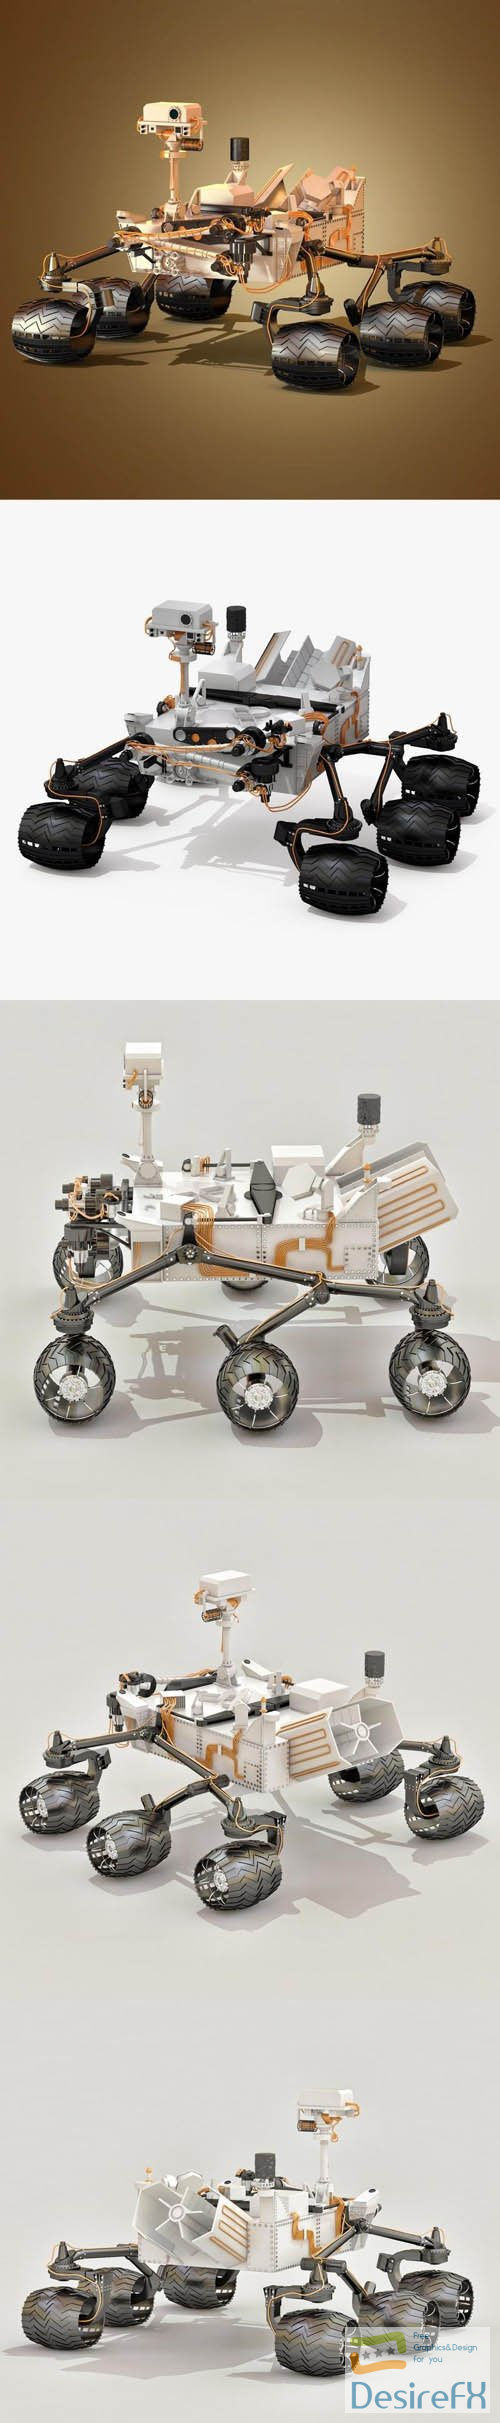 NASA Mars Exploration Rover Curiosity - 3d model